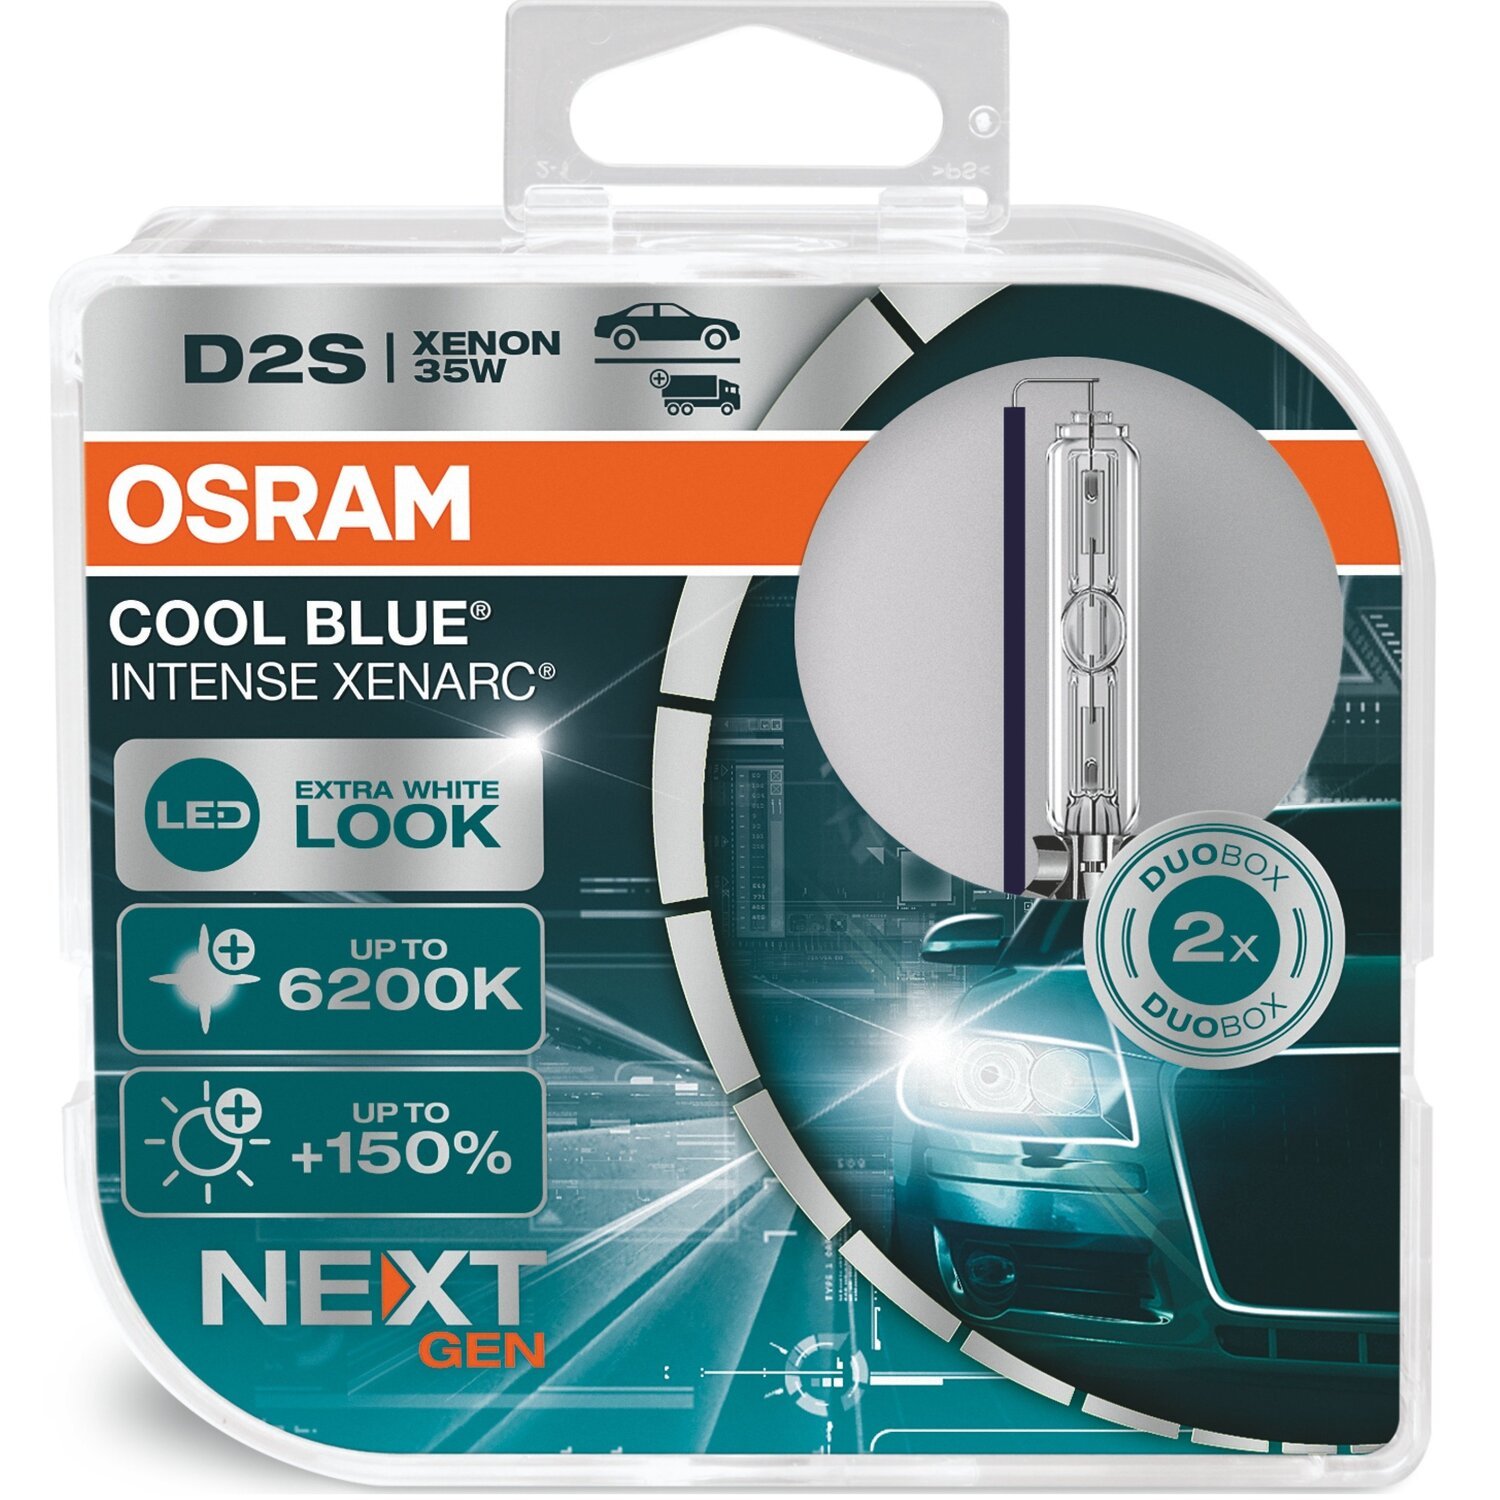 Лампа Osram ксенонова 85V D2S 35W P32D-2 xenarc Cool Blue Intense, Duobox (2шт) (OS_66240_CBI-HCB)фото